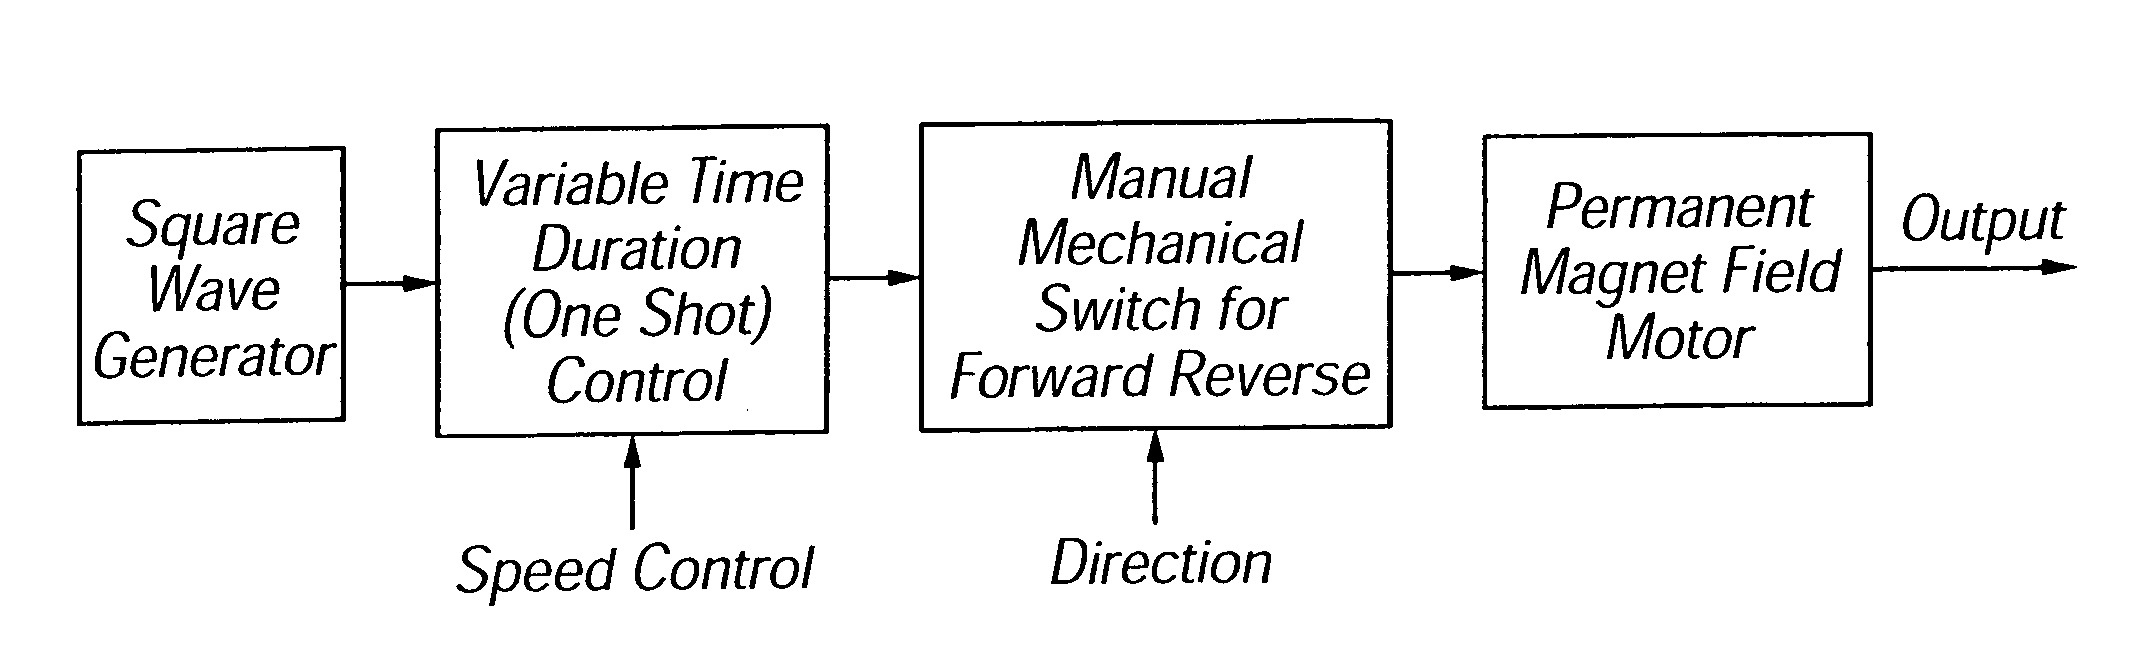 Digital motor control system and method